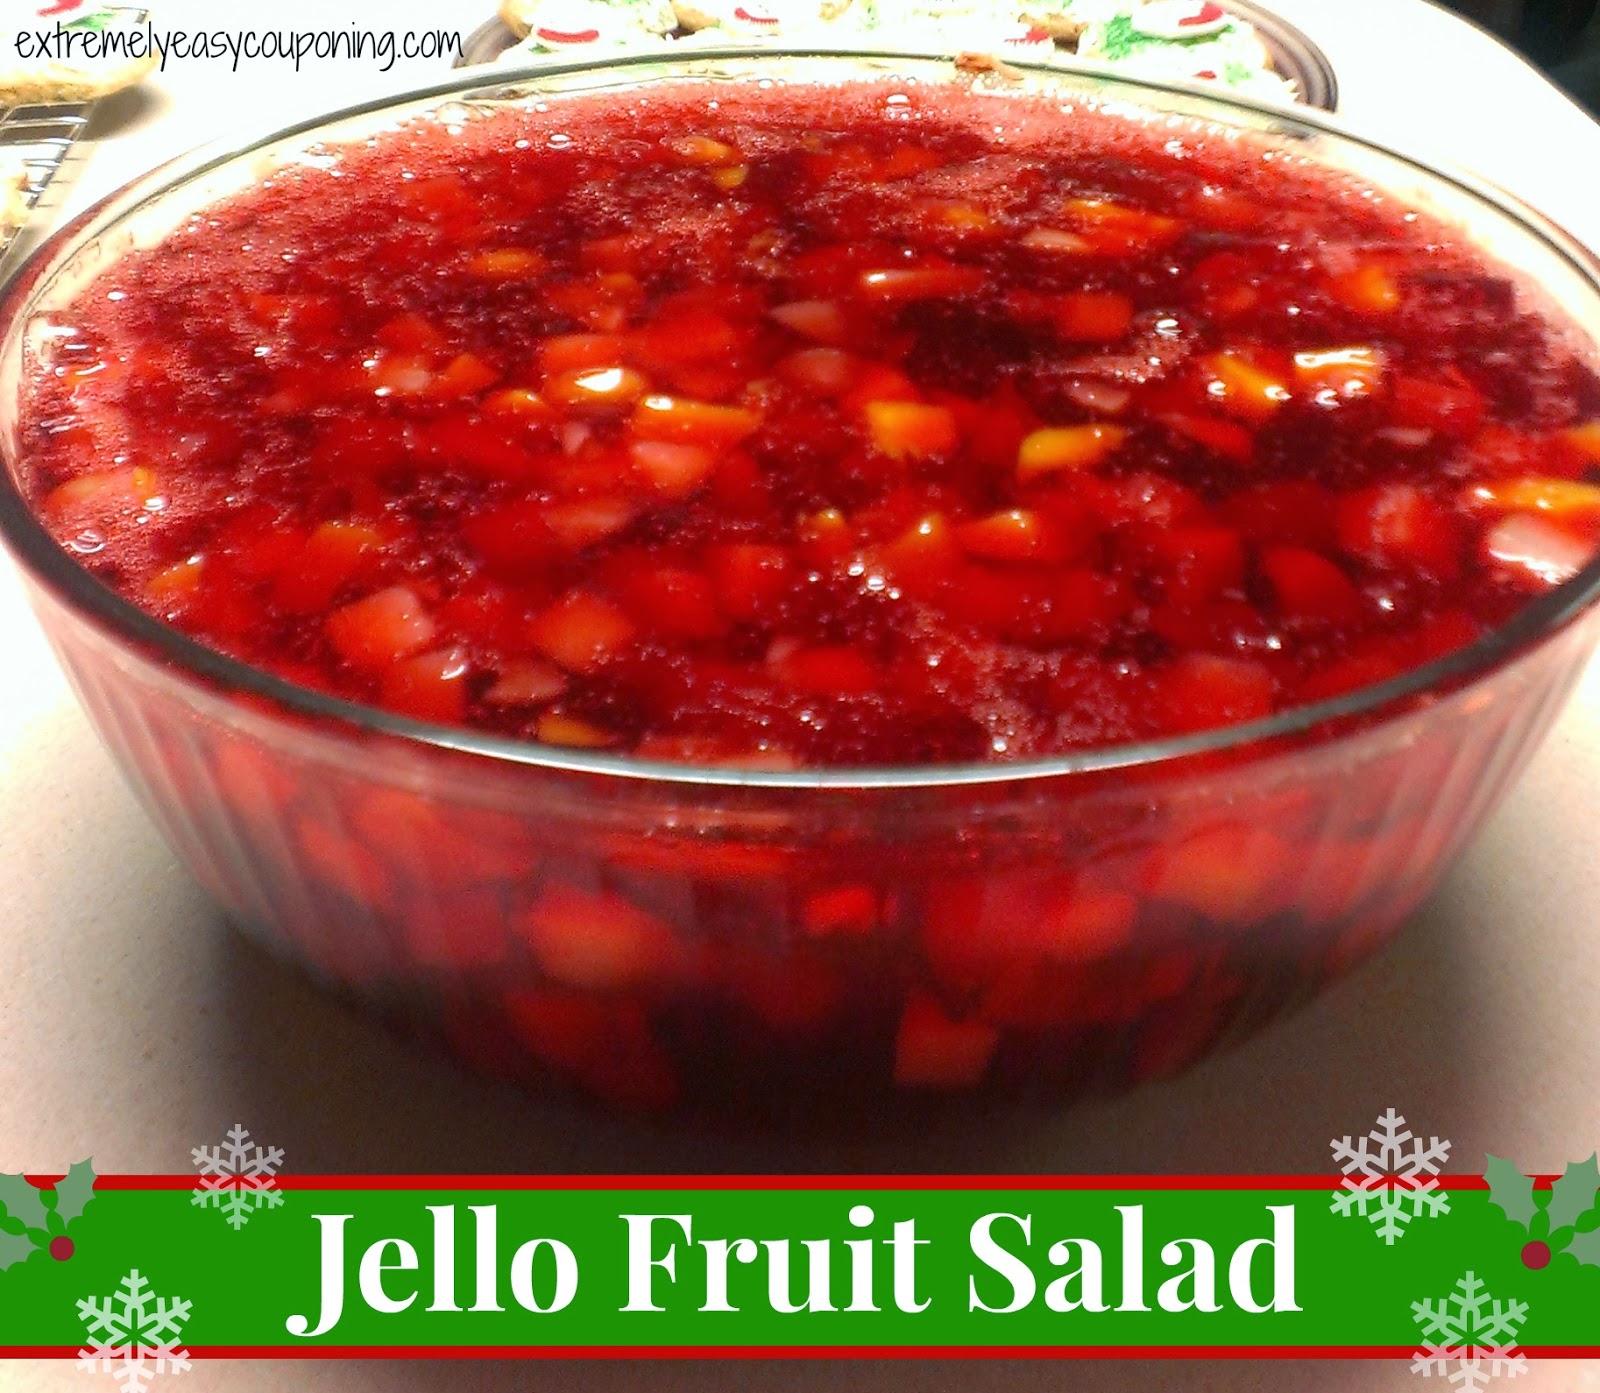 jello+fruit+salad4.jpg